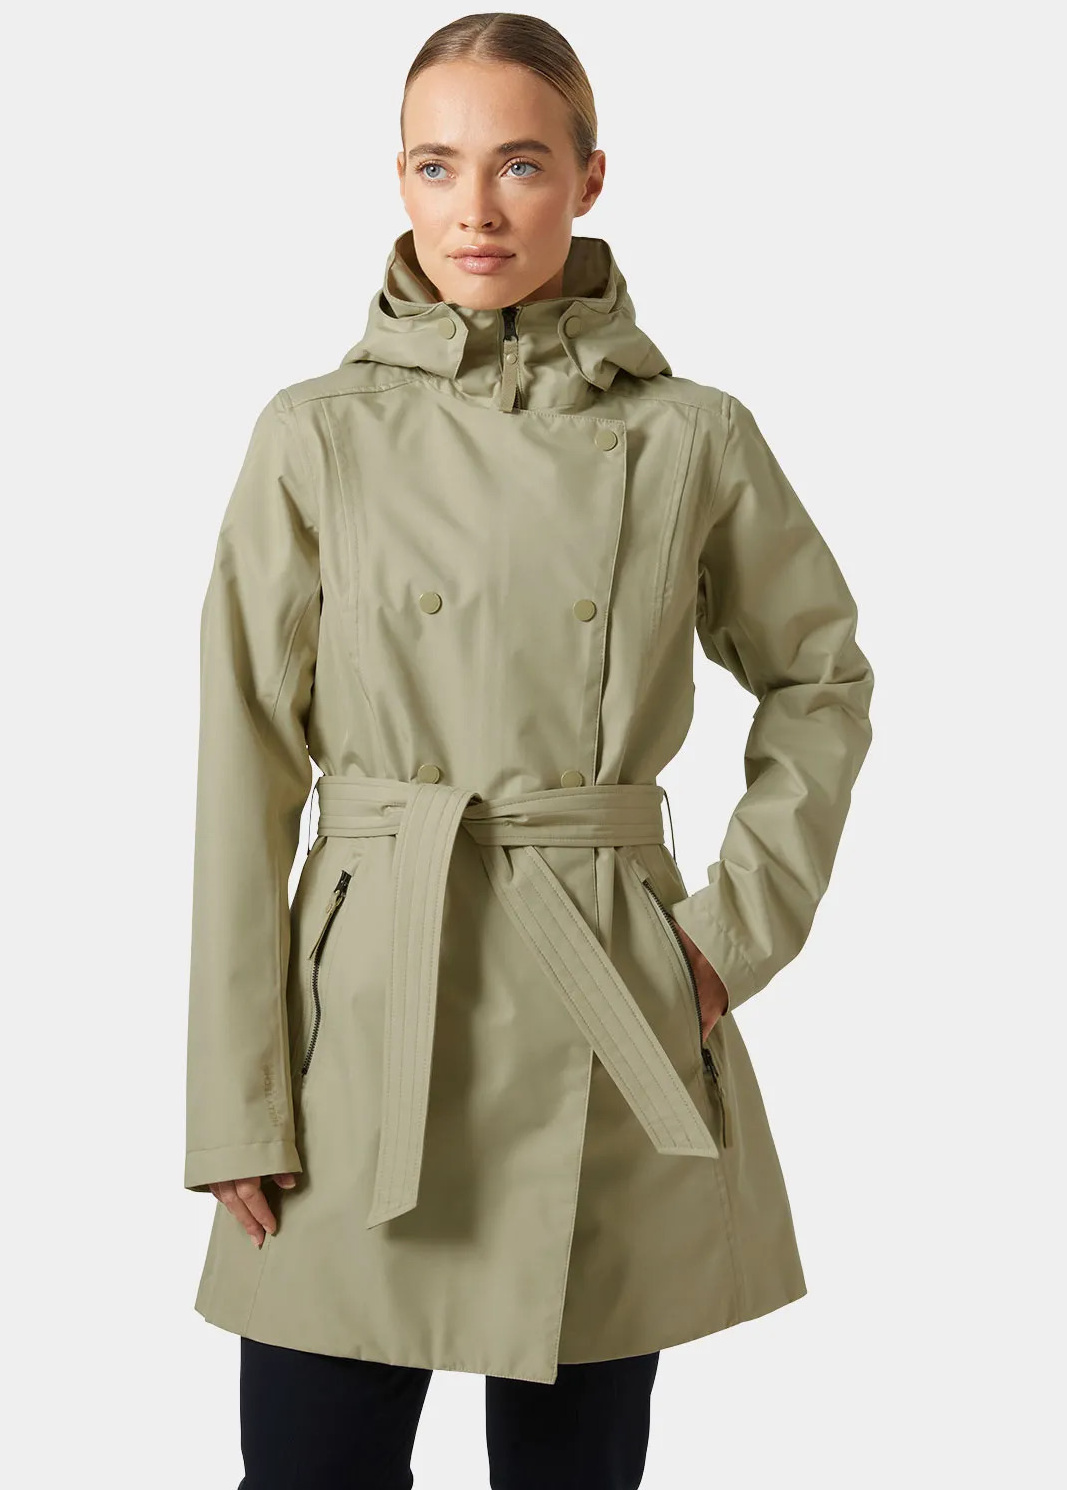 travel-raincoats-for-women